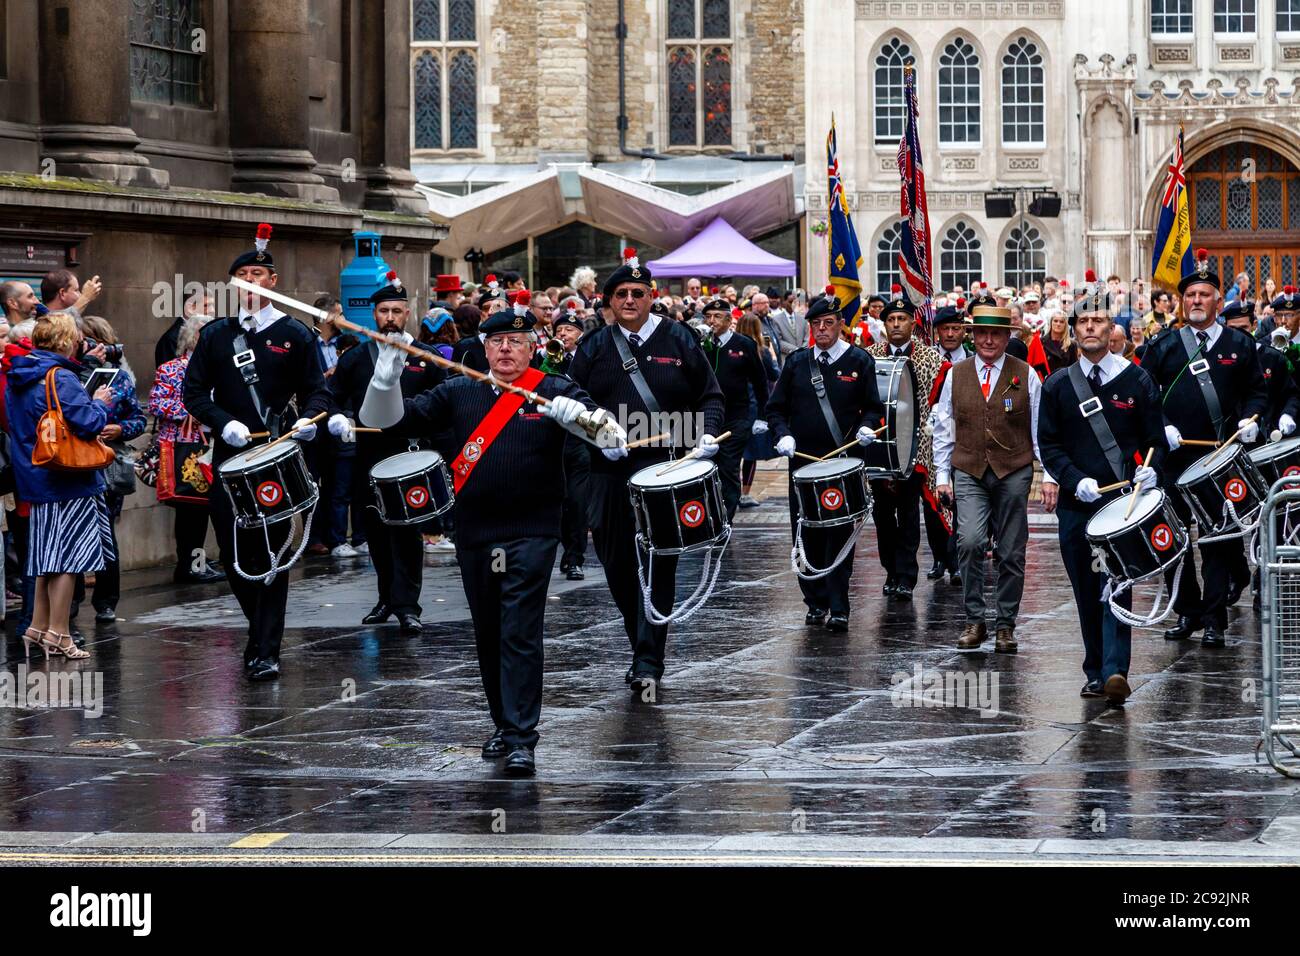 Un groupe de Marching militaire se déroule au PEarly Kings and Queens Annual Harvest Festival qui a lieu au Guildhall Yard, Londres, Angleterre. Banque D'Images